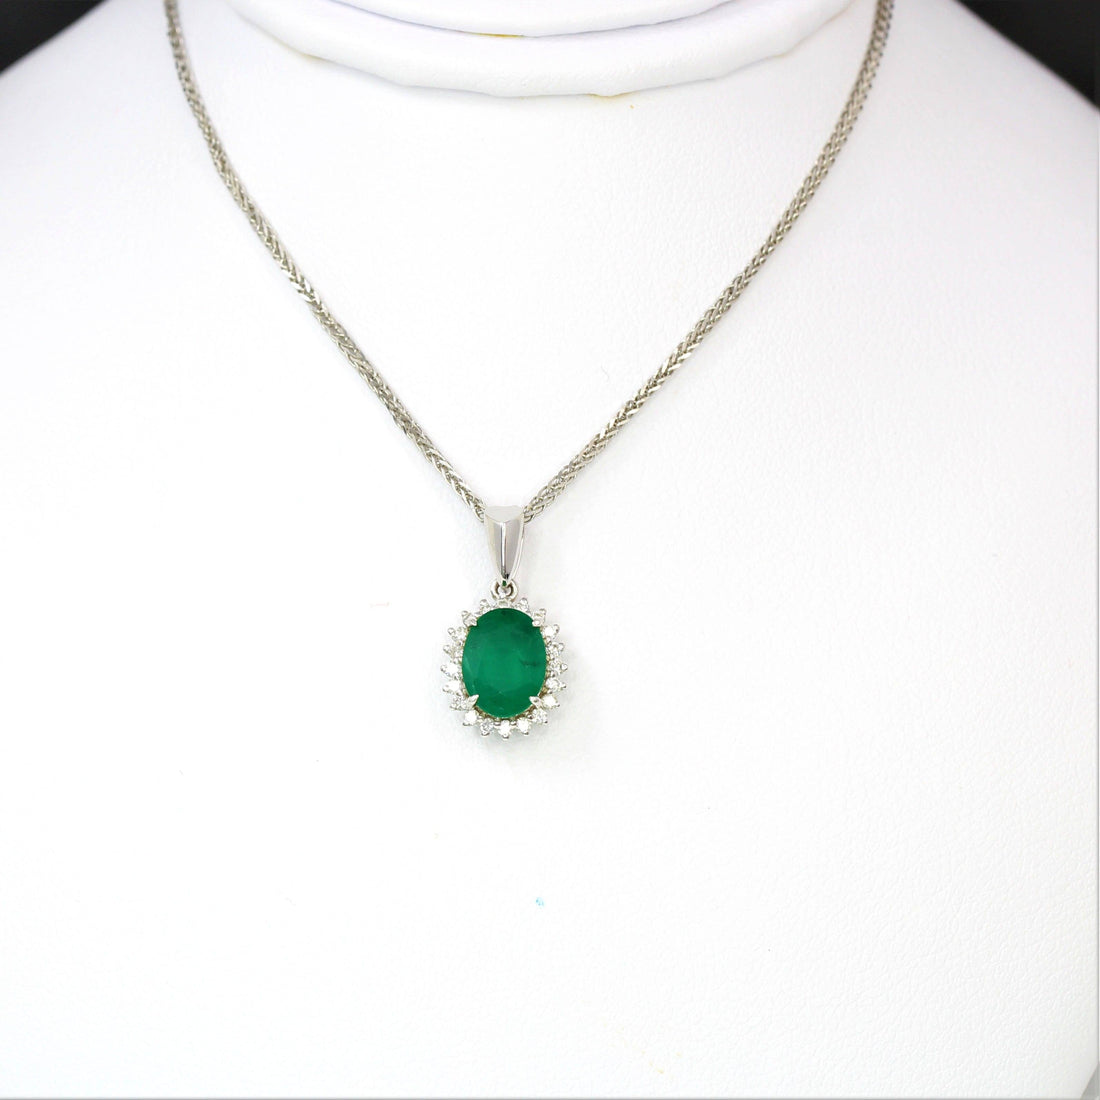 Baikalla Jewelry Emerald Pendant Necklace 18K White Gold Emerald & 1/6 CTW Diamond Pendant Necklace